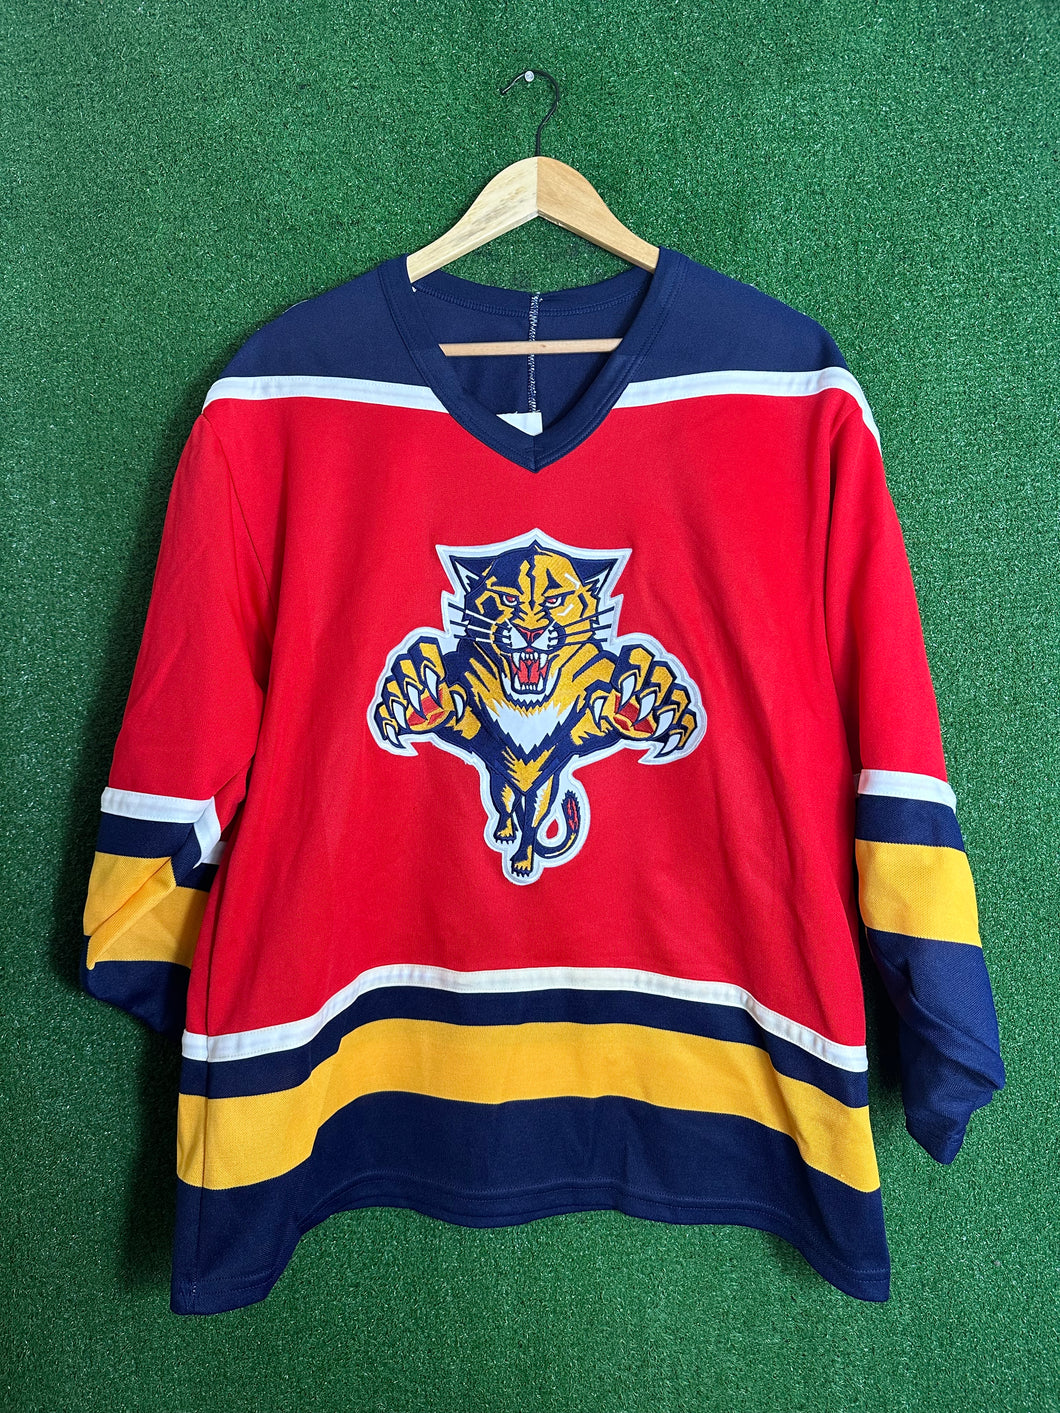 VTG NHL Florida Panthers Hockey Jersey Size Medium